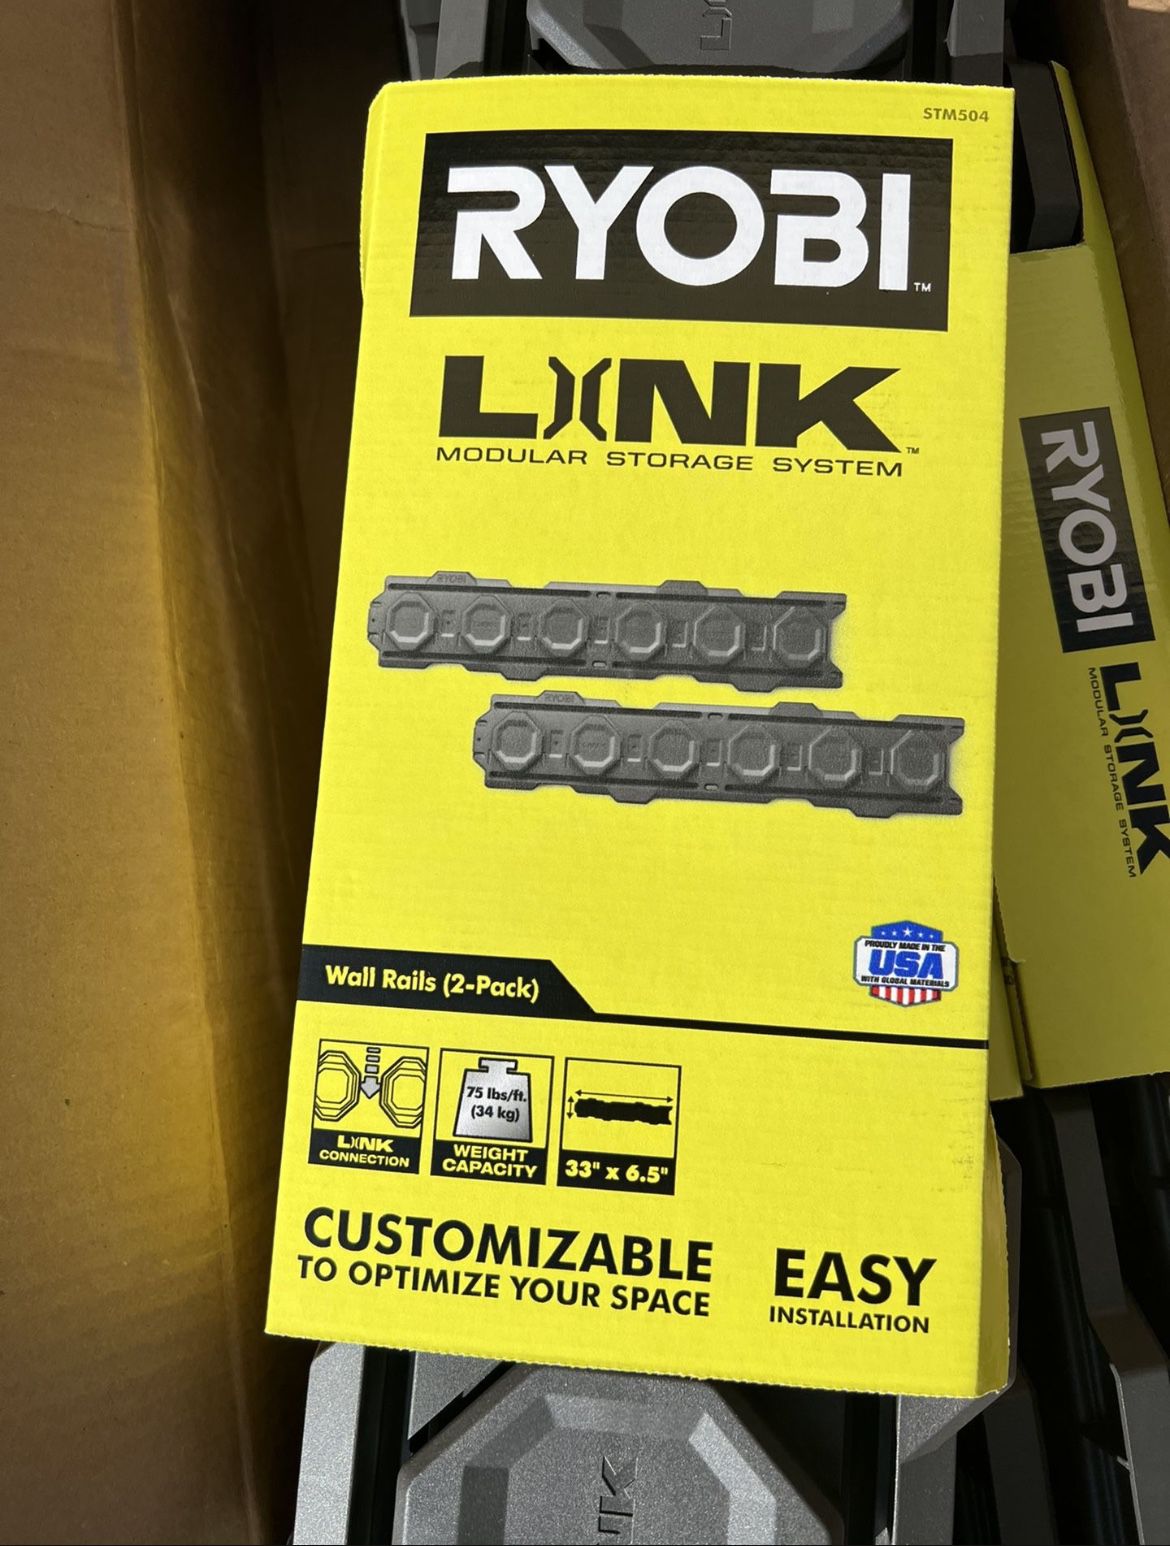 RYOBI LINK Wall Rails (2-Pack)